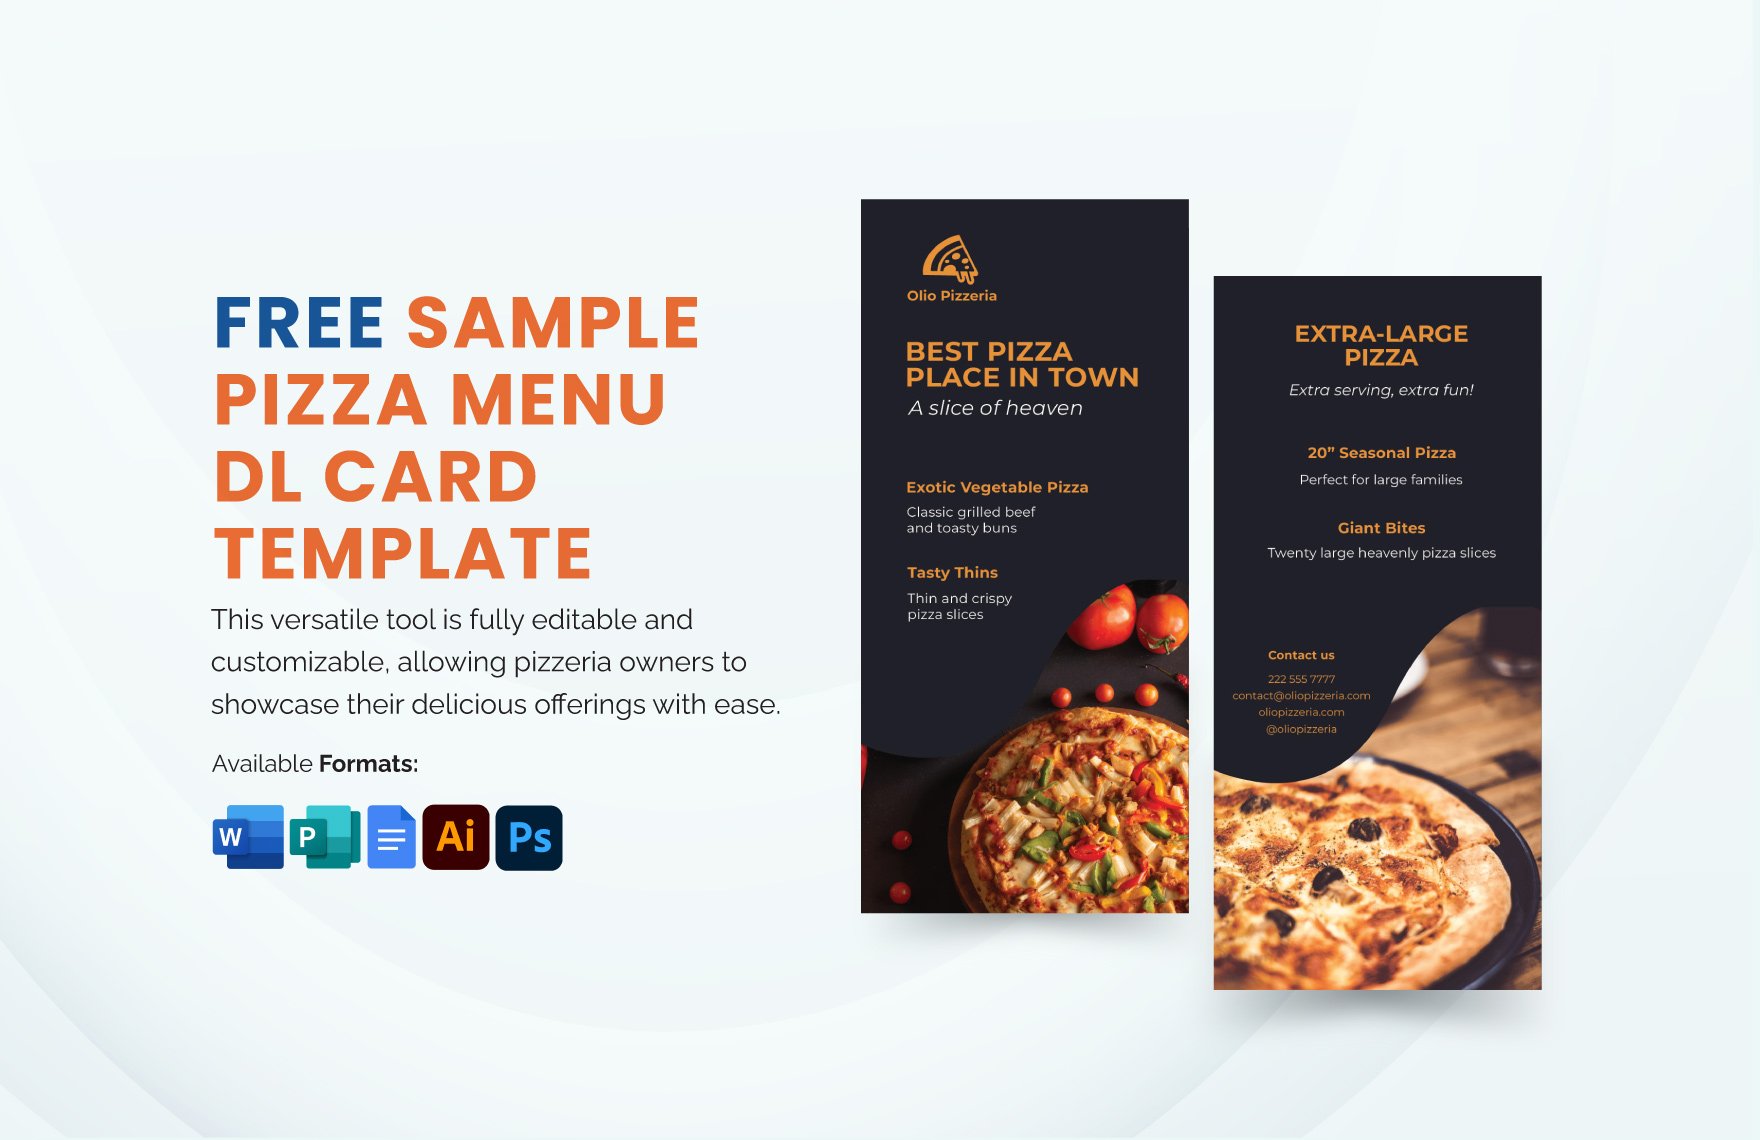 Sample Pizza Menu DL Card Template